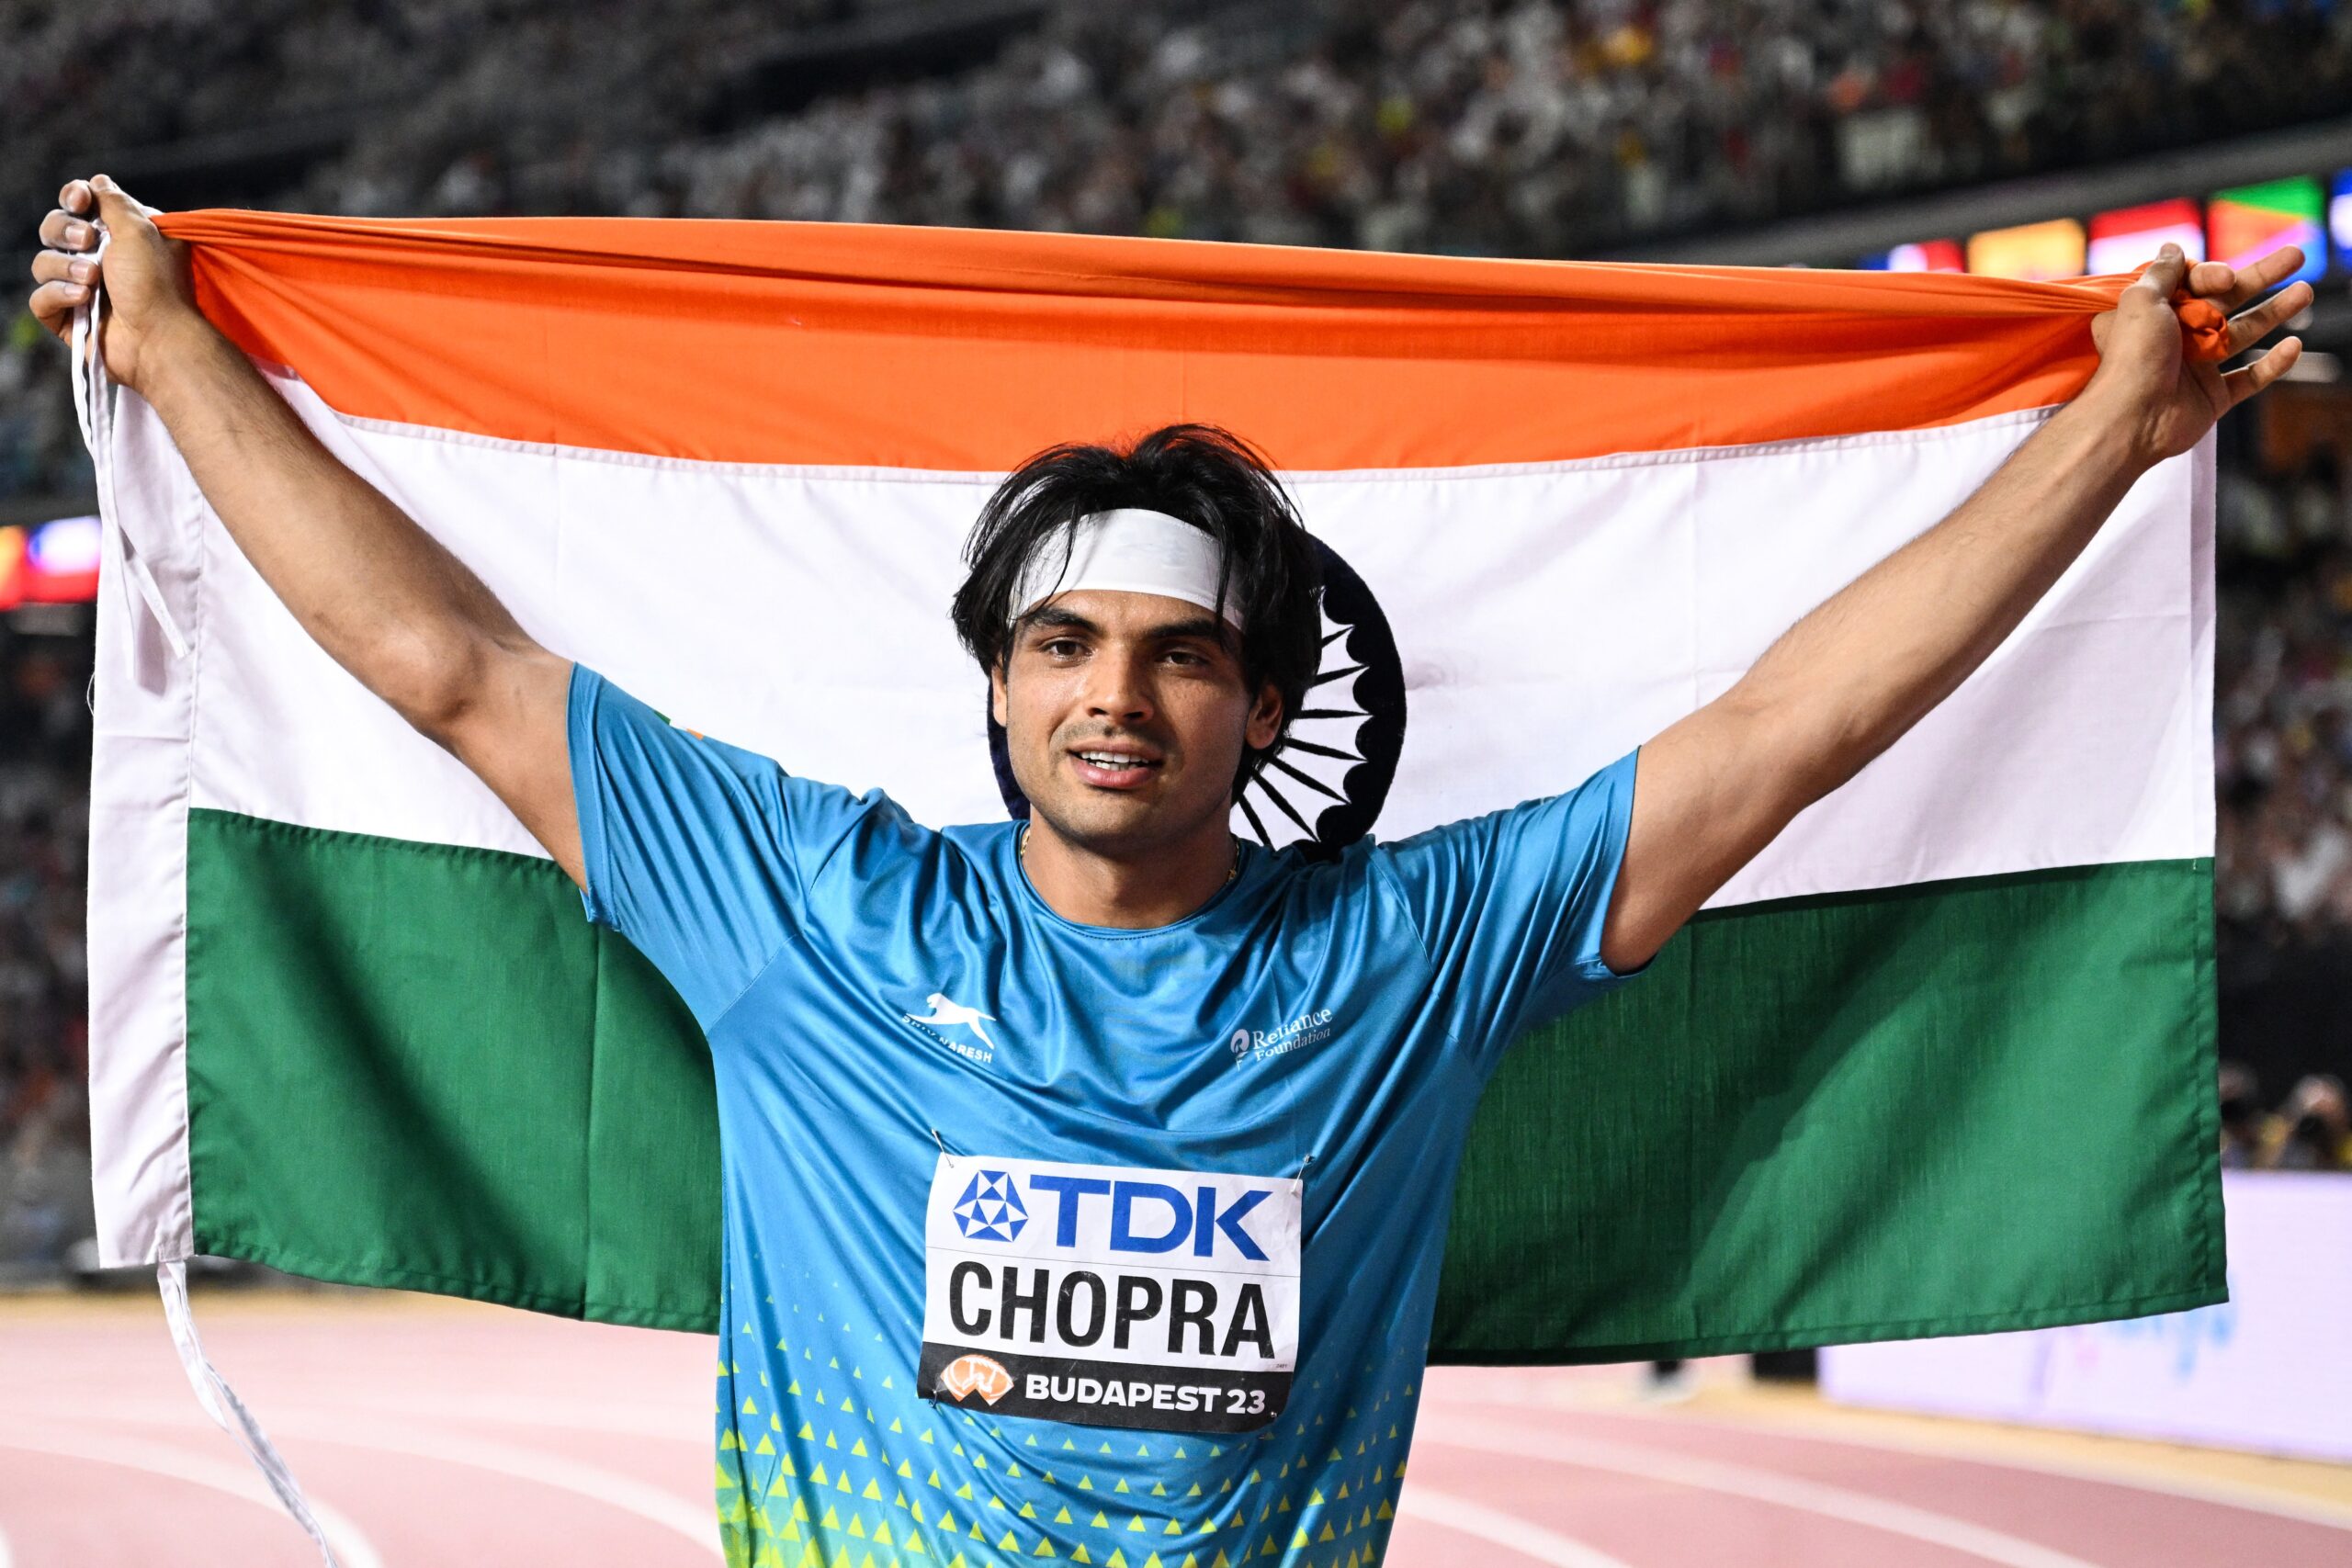 India Set To Bid For 2027 World Athletics Championships: Neeraj Chopra